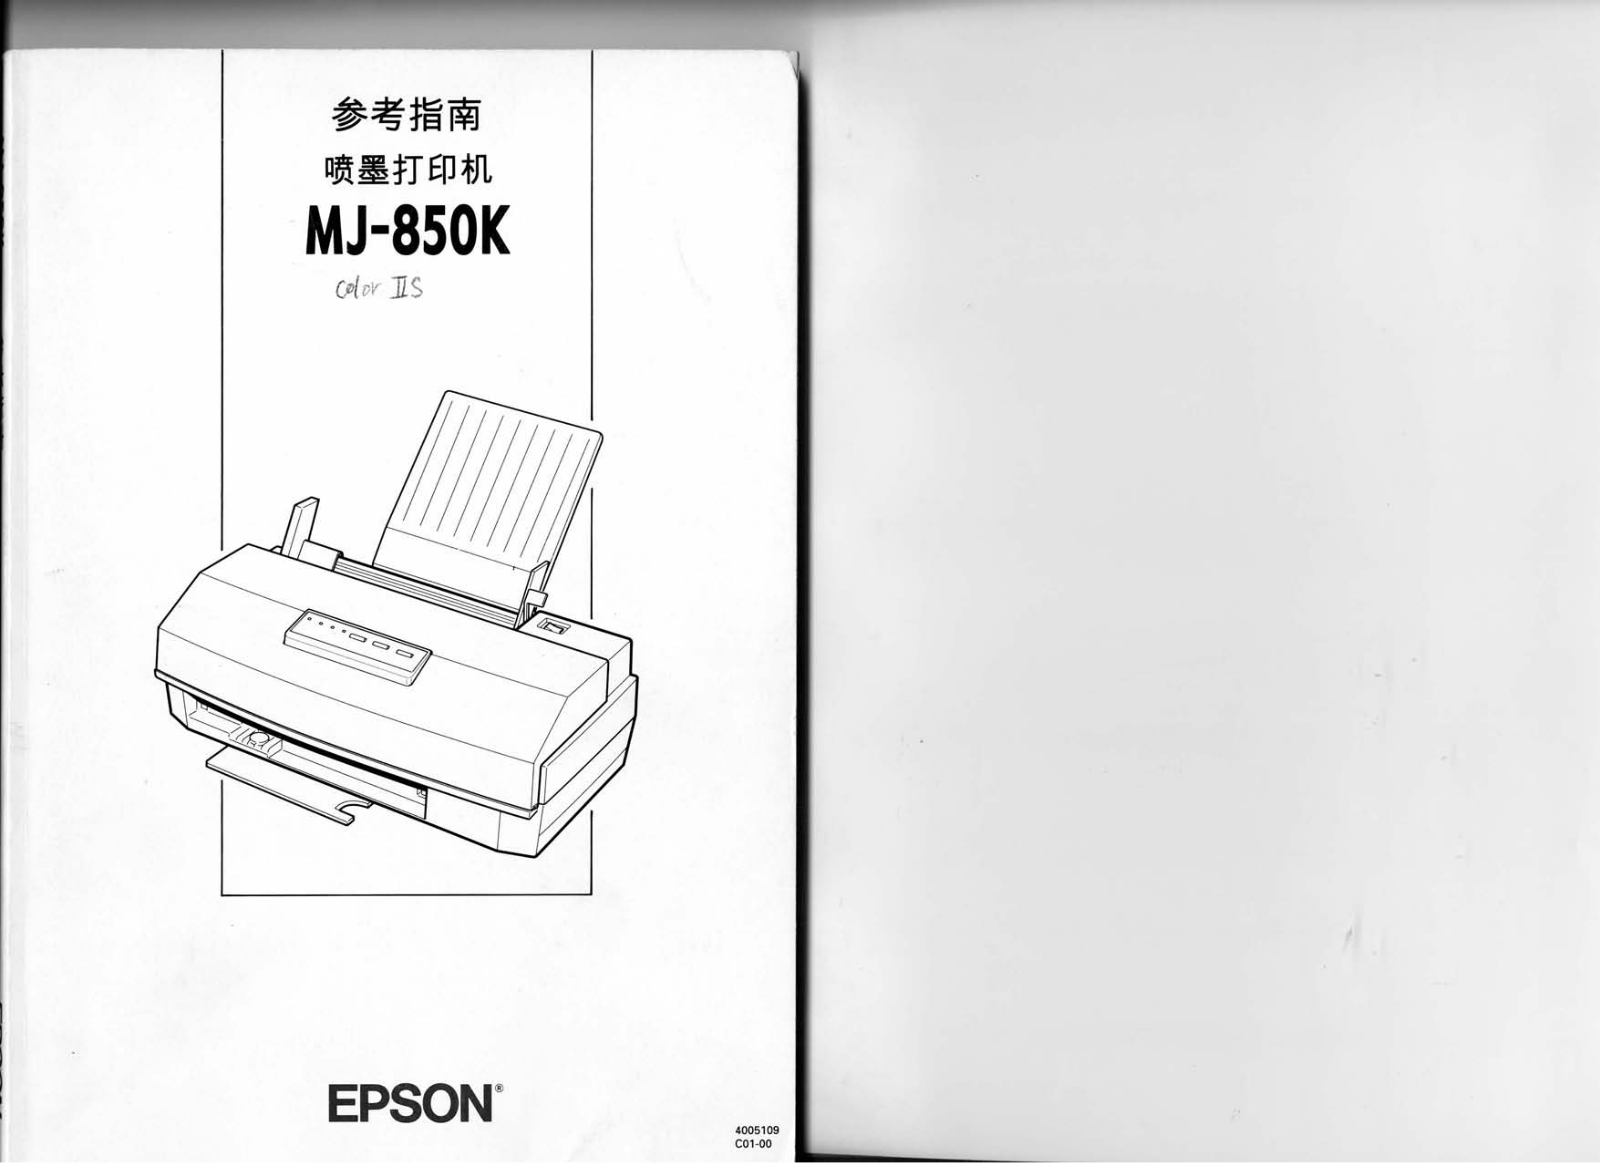 Epson STYLUS MJ-850K User Manual